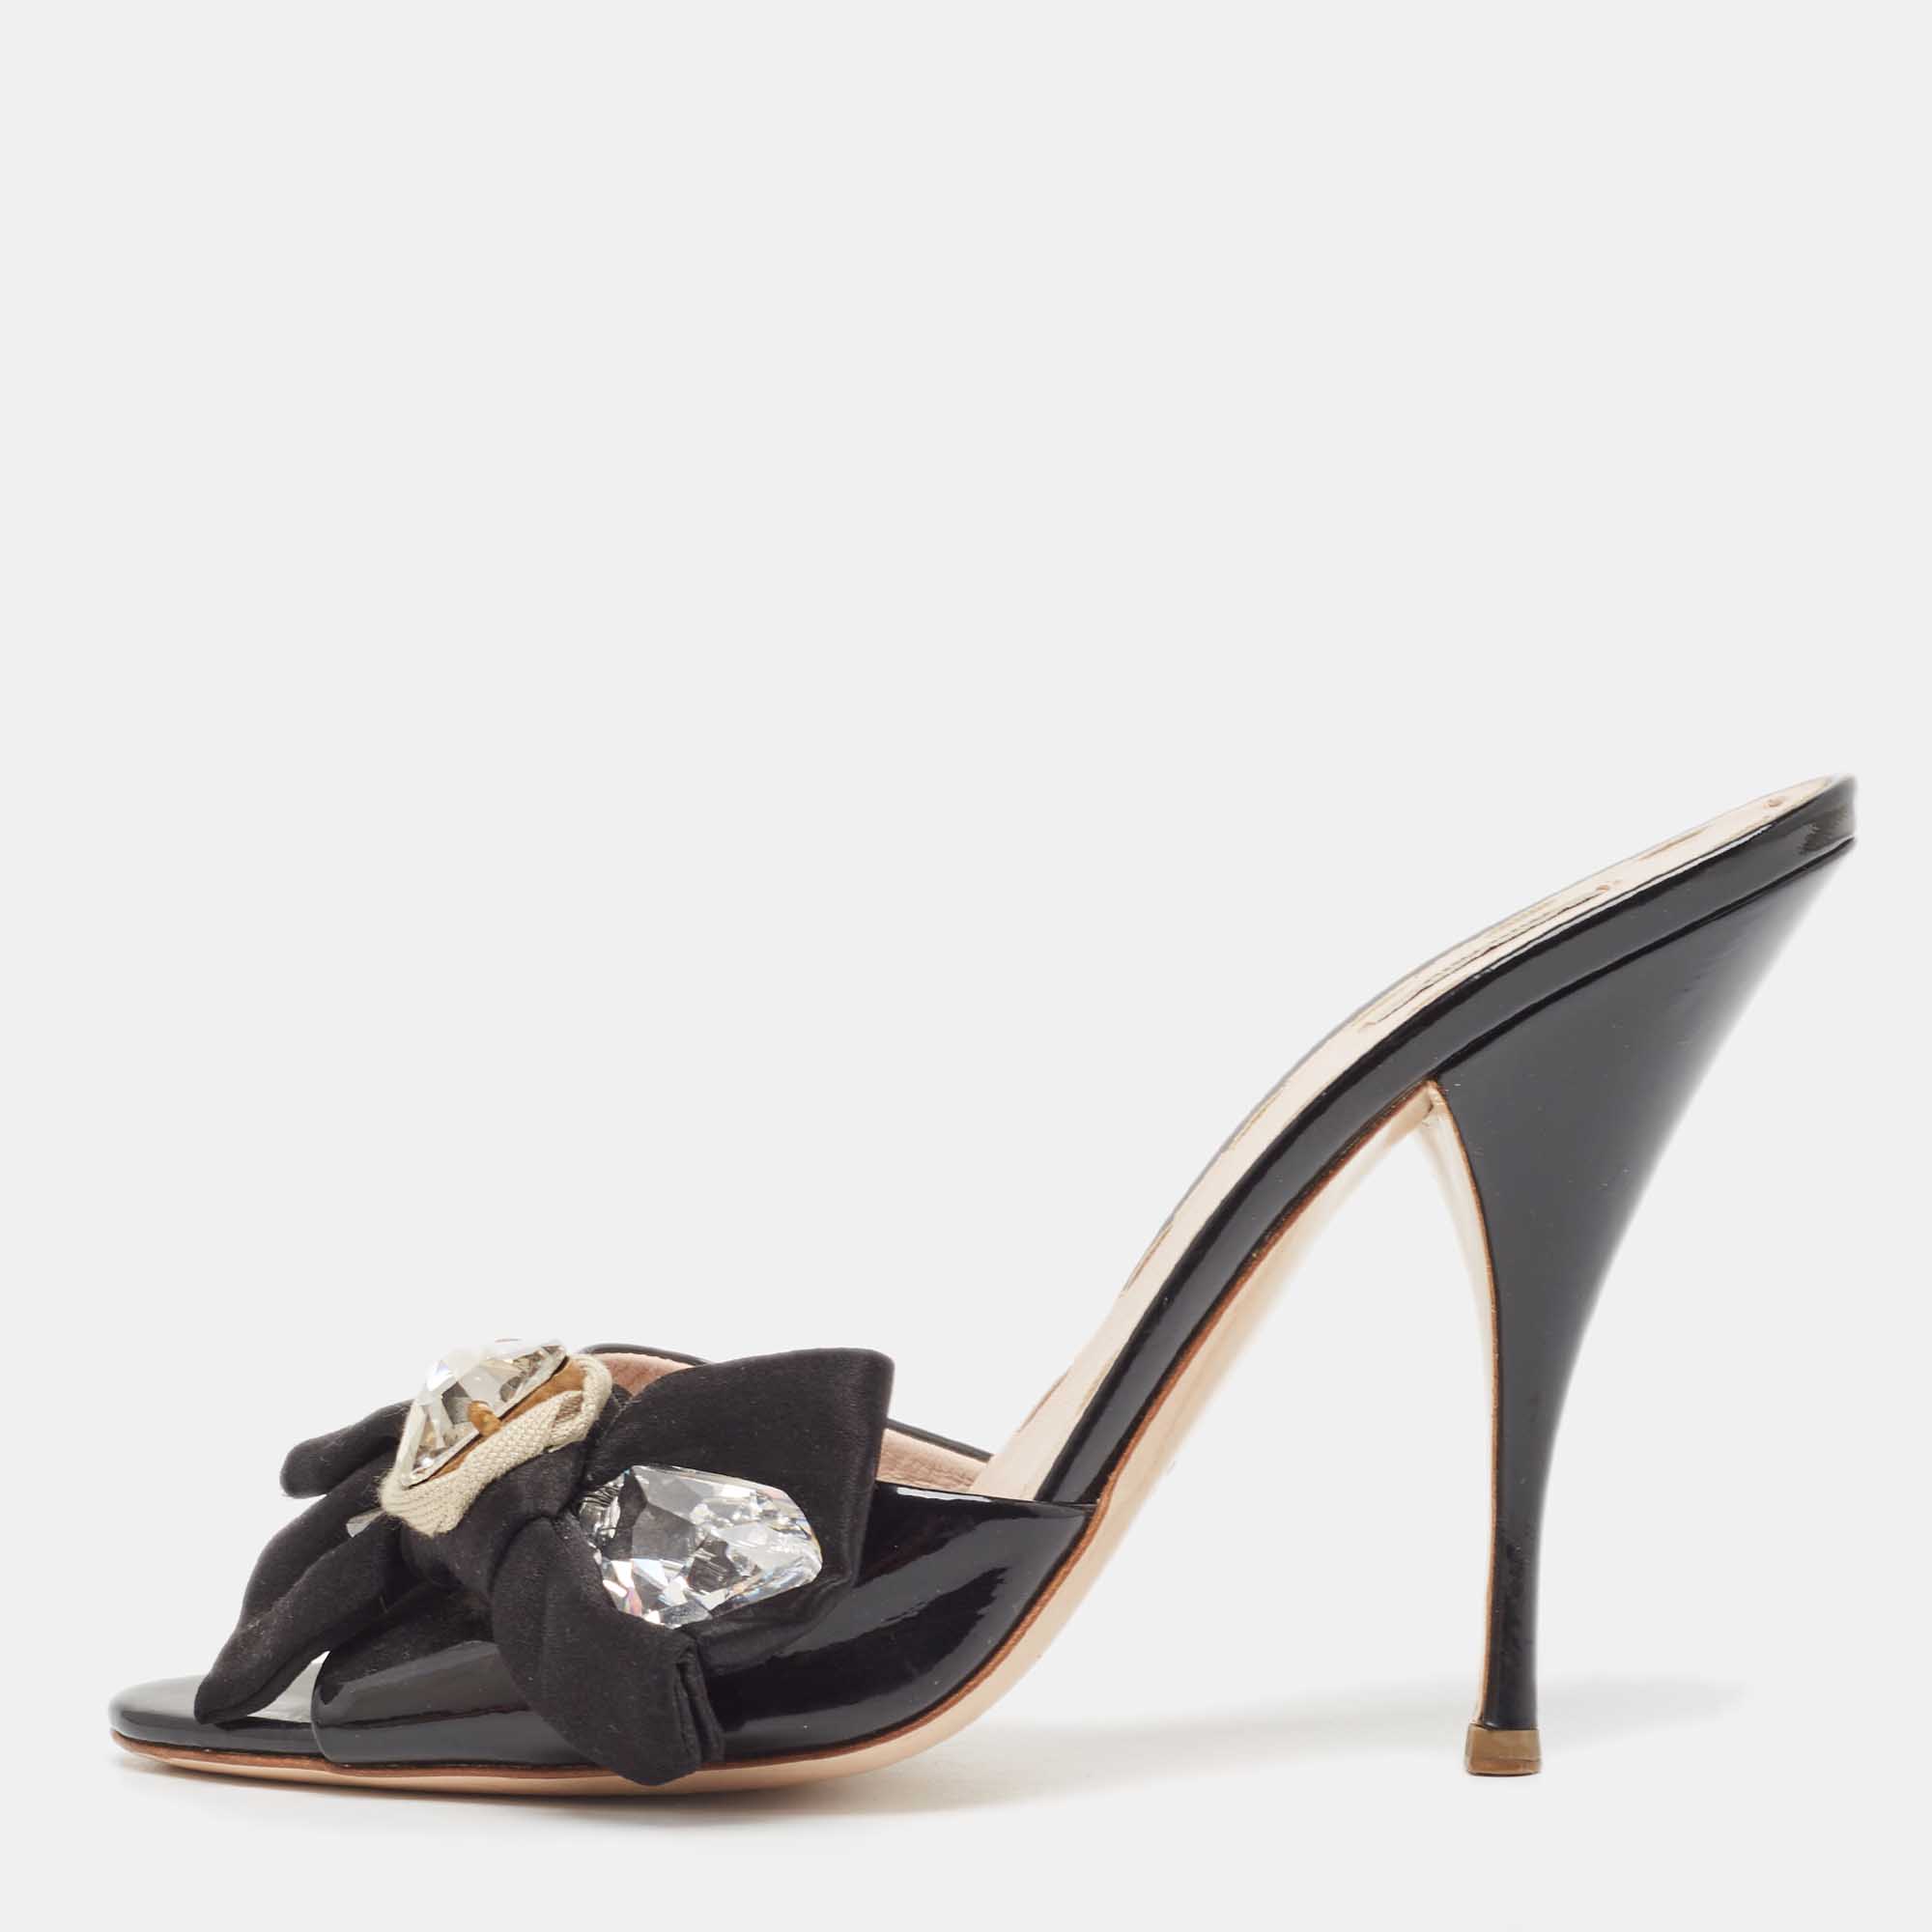 Pre-owned Miu Miu Black Patent Leather Crystal Embellished Bow Slide Sandals Size 39